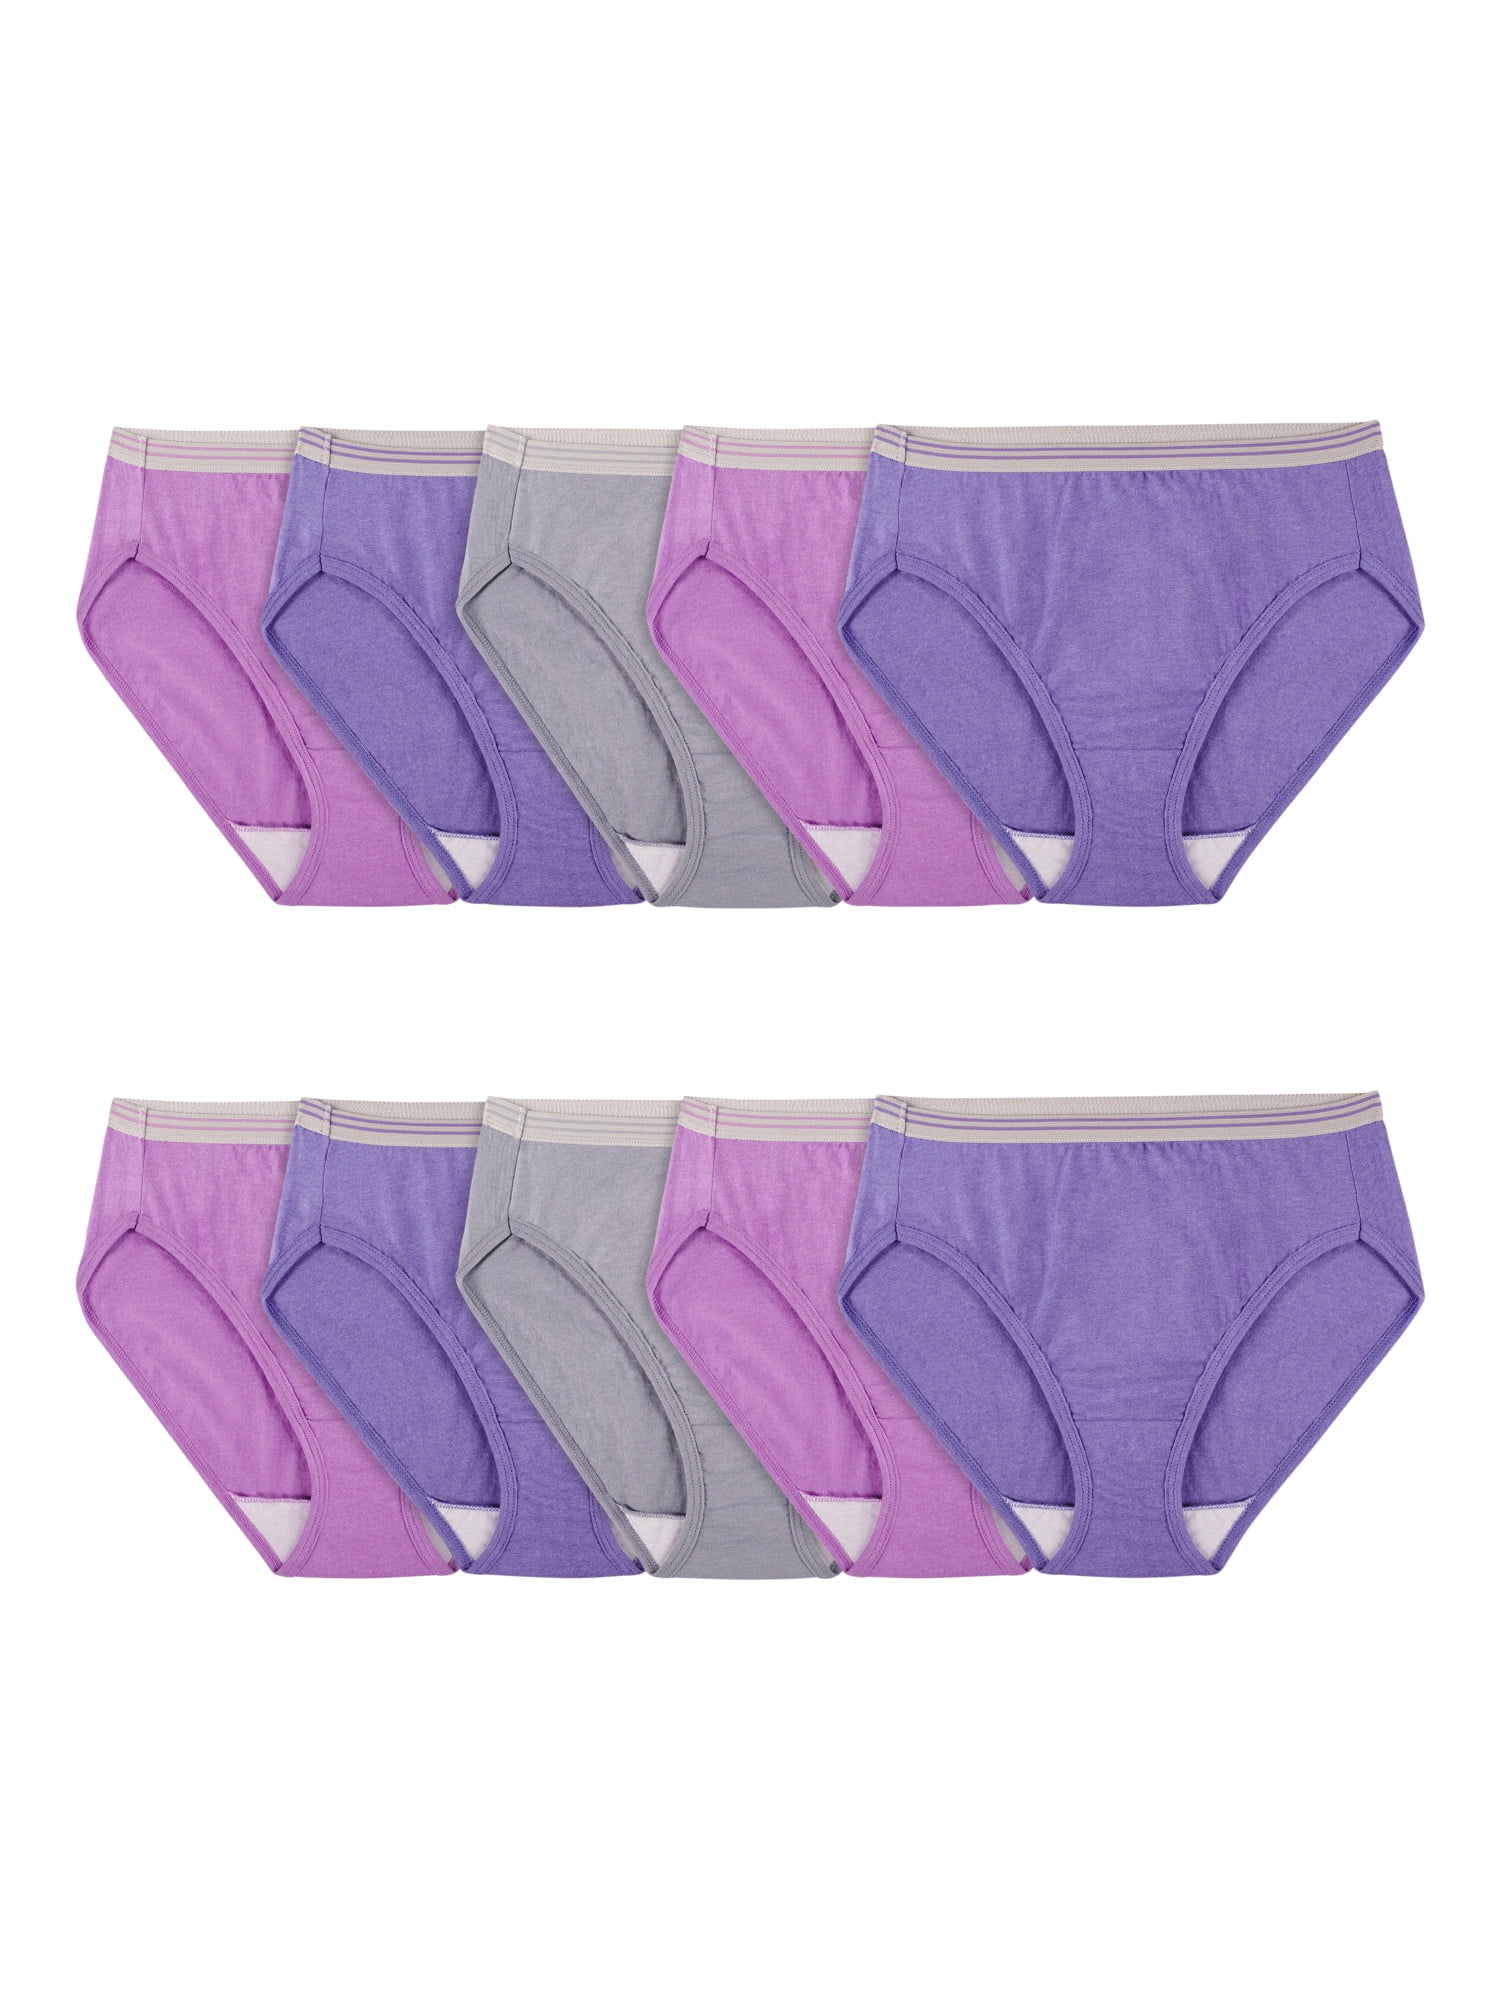 NIP FRUIT OF THE LOOM Size 6 M Purple Brief Cotton Underwear Panties~3  Pairs